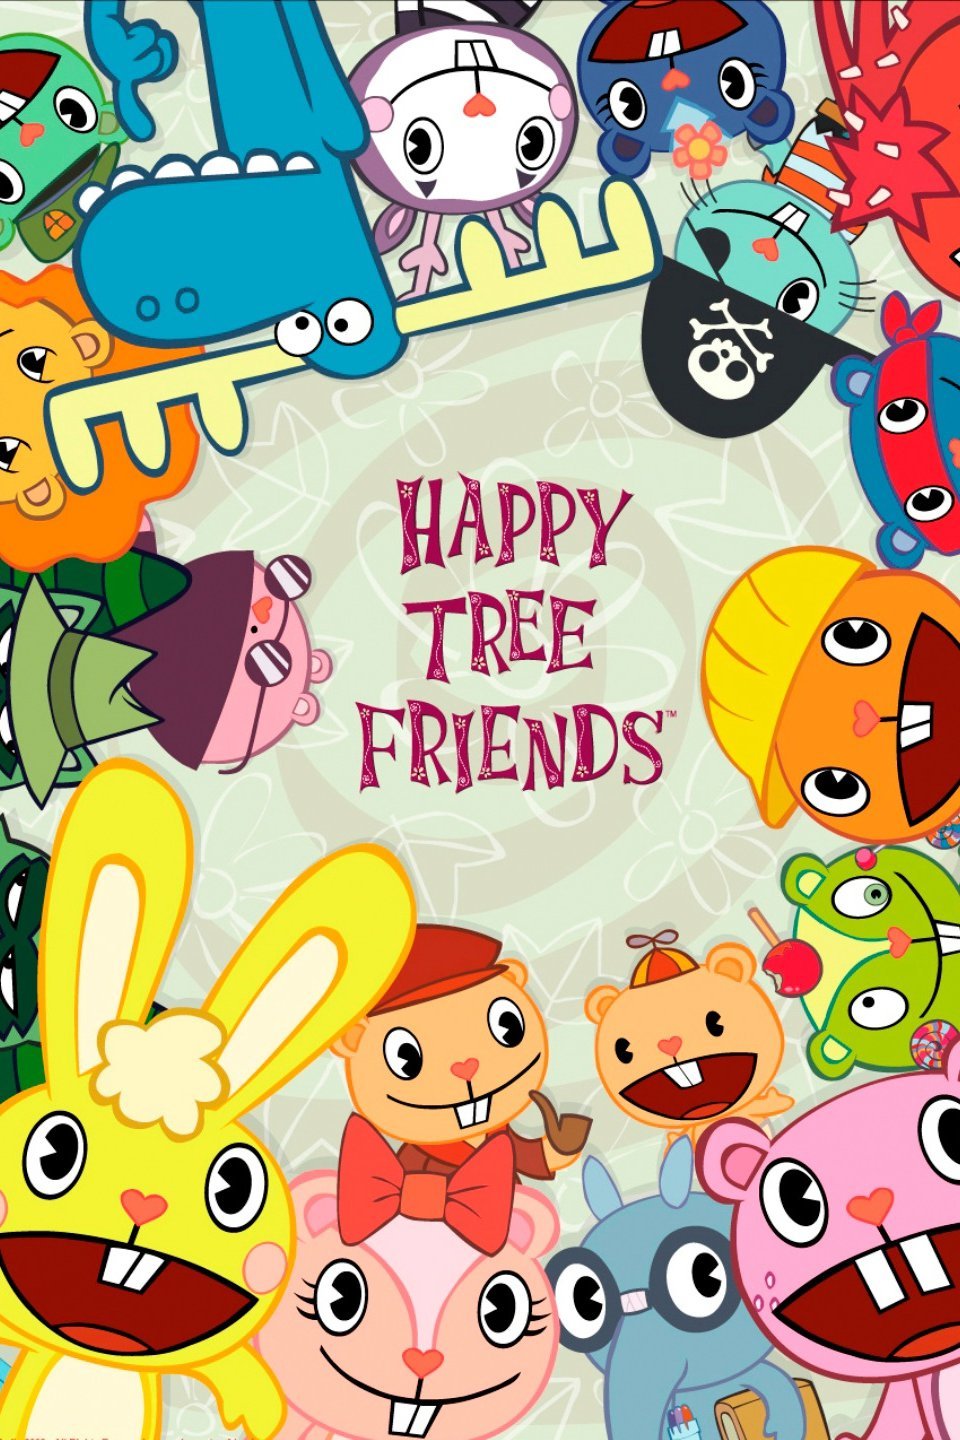 Happy Tree Friends（ハッピーツリーフレンズ）のネタバレ解説・考察まとめ | RENOTE [リノート]